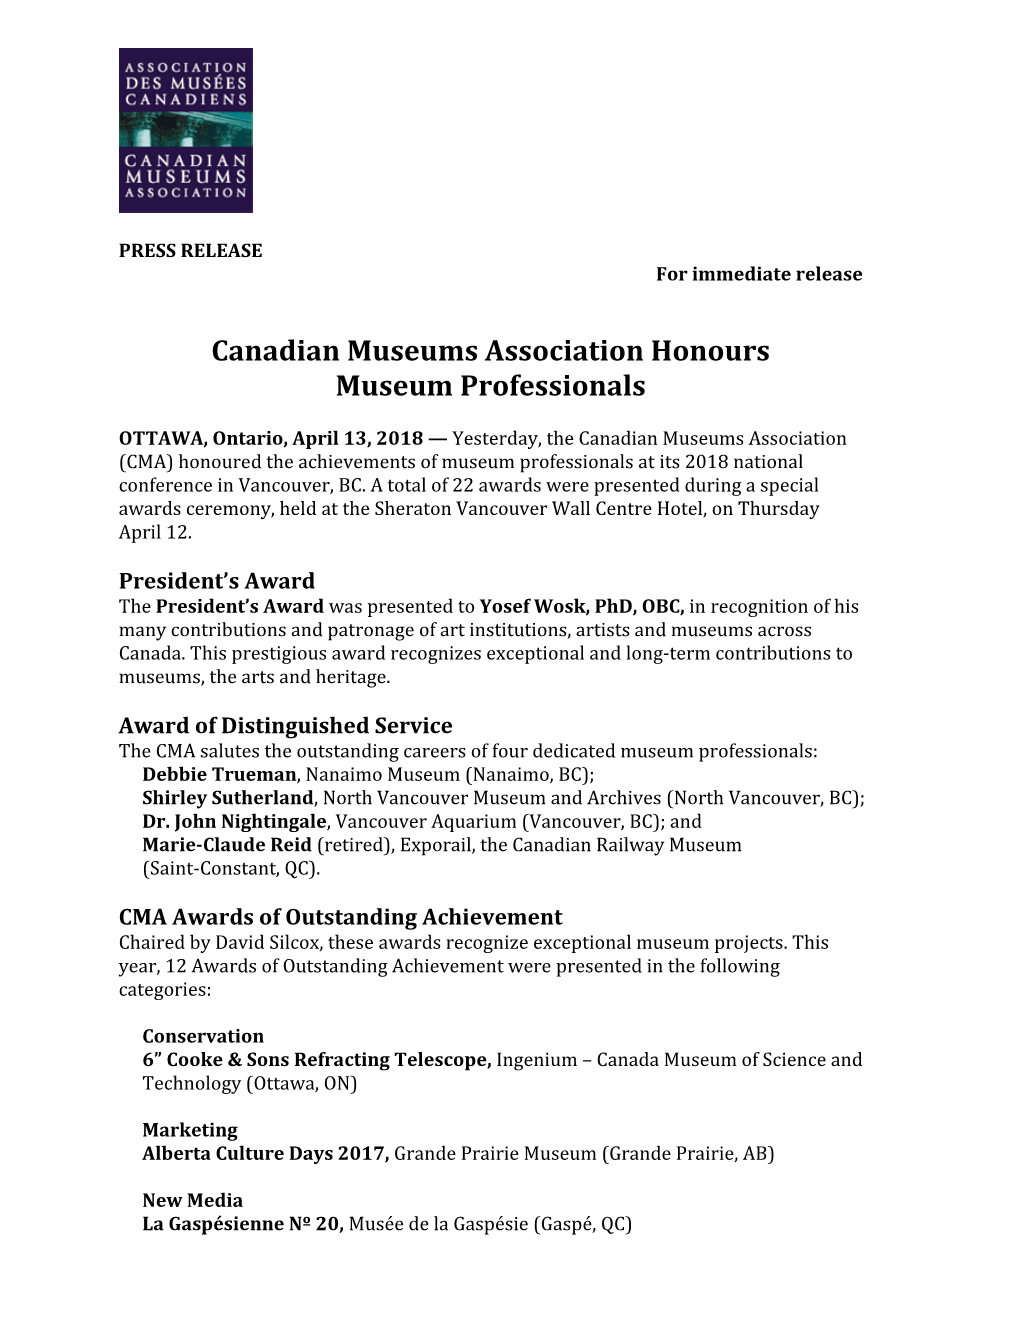 Canadian Museums Association Honours Museum Professionals